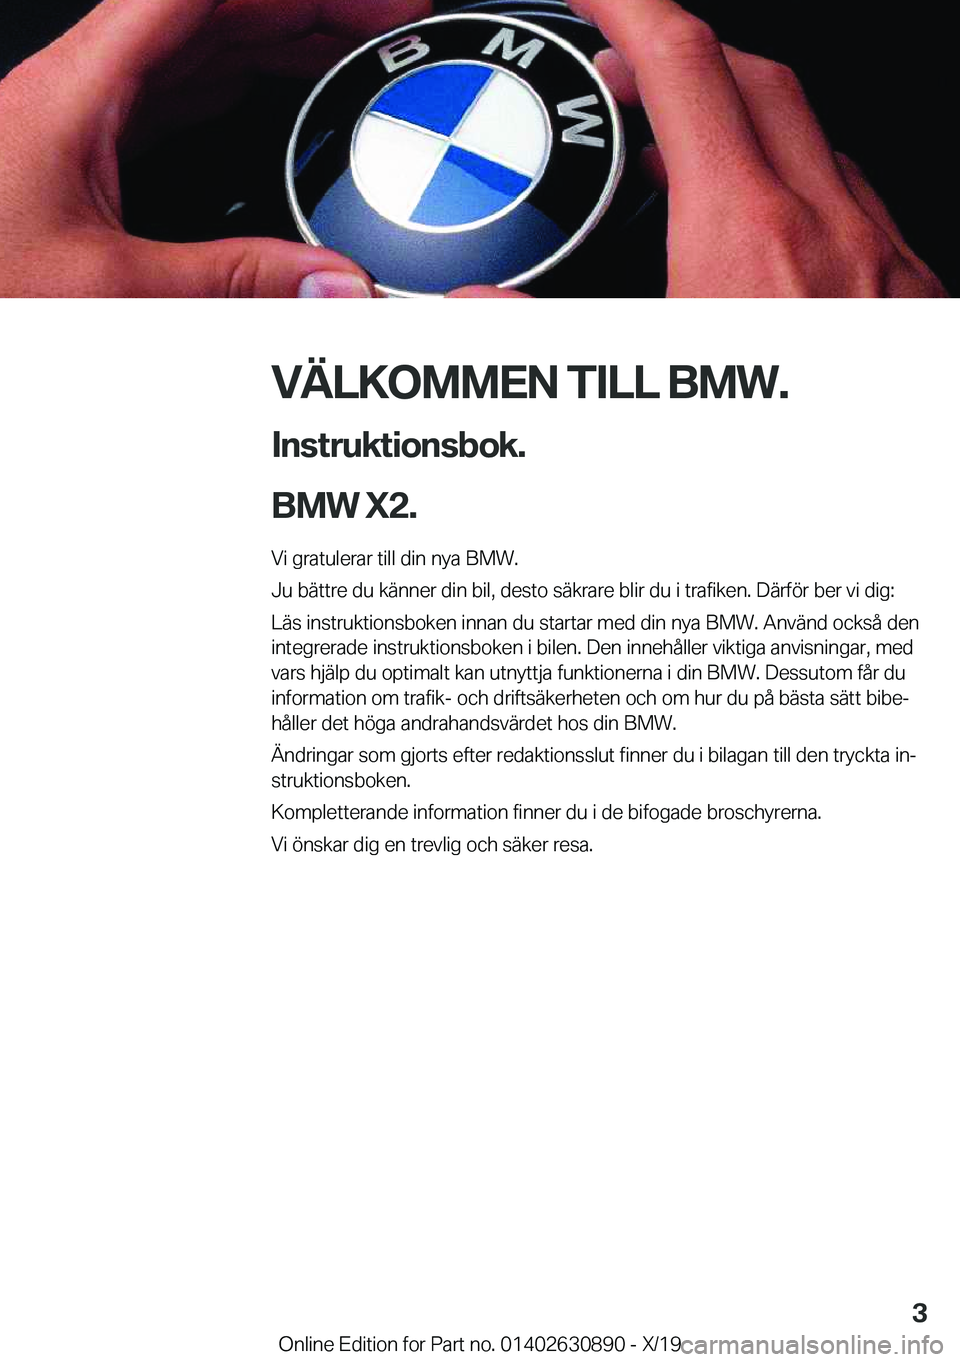 BMW X2 2020  InstruktionsbÖcker (in Swedish) �V�Ä�L�K�O�M�M�E�N��T�I�L�L��B�M�W�.�I�n�s�t�r�u�k�t�i�o�n�s�b�o�k�.
�B�M�W��X�2�.
�V�i��g�r�a�t�u�l�e�r�a�r��t�i�l�l��d�i�n��n�y�a��B�M�W�.
�J�u��b�ä�t�t�r�e��d�u��k�ä�n�n�e�r��d�i�n�